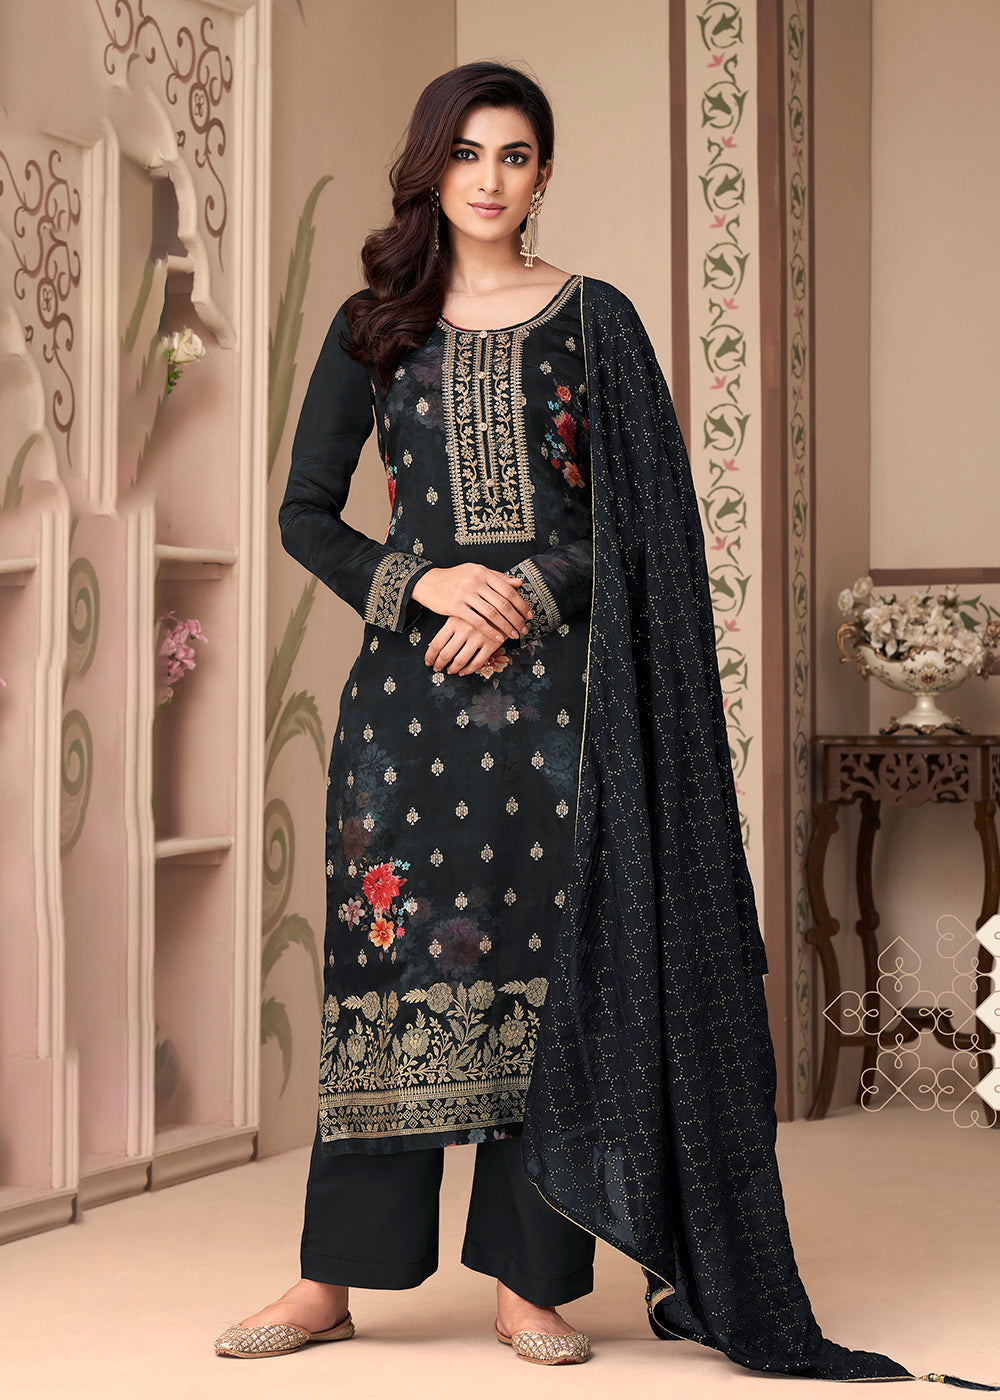 Buy Now Jacquard Silk Alluring Black Digital Printed Salwar Suit Online in USA, UK, Canada, Germany, Australia & Worldwide at Empress Clothing.